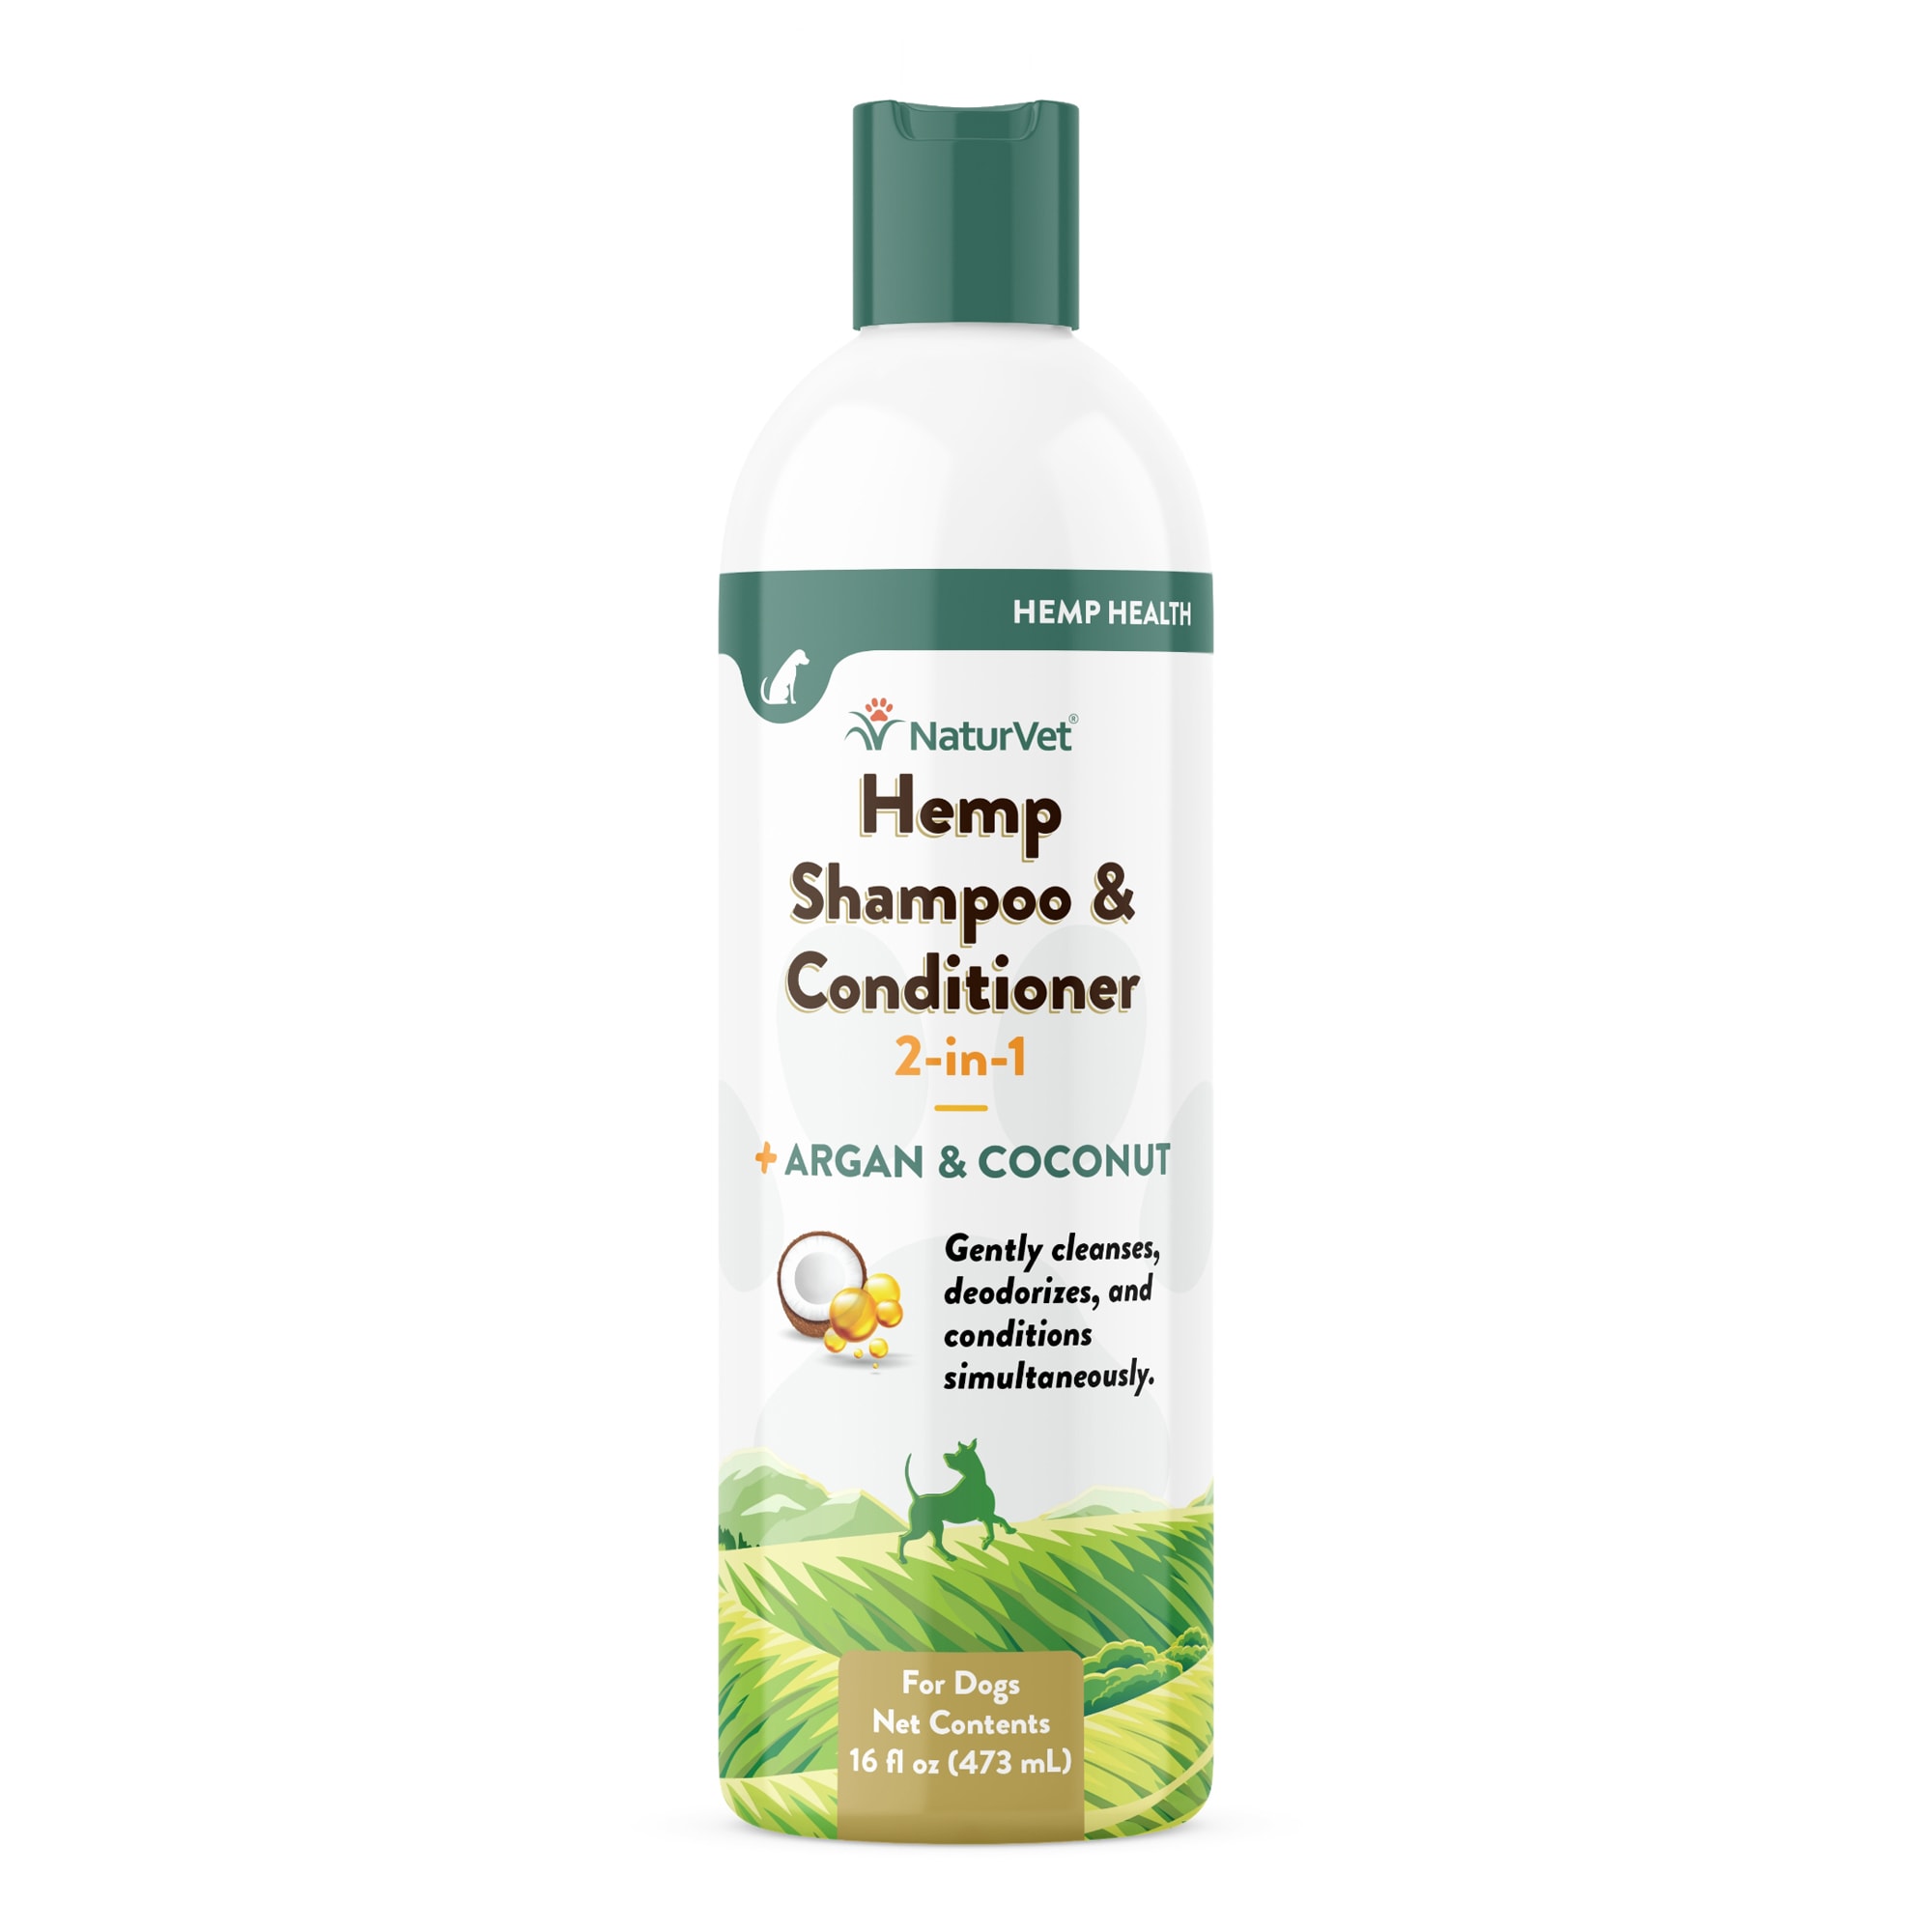 NaturVet Hemp 2-in-1 Shampoo \u0026 